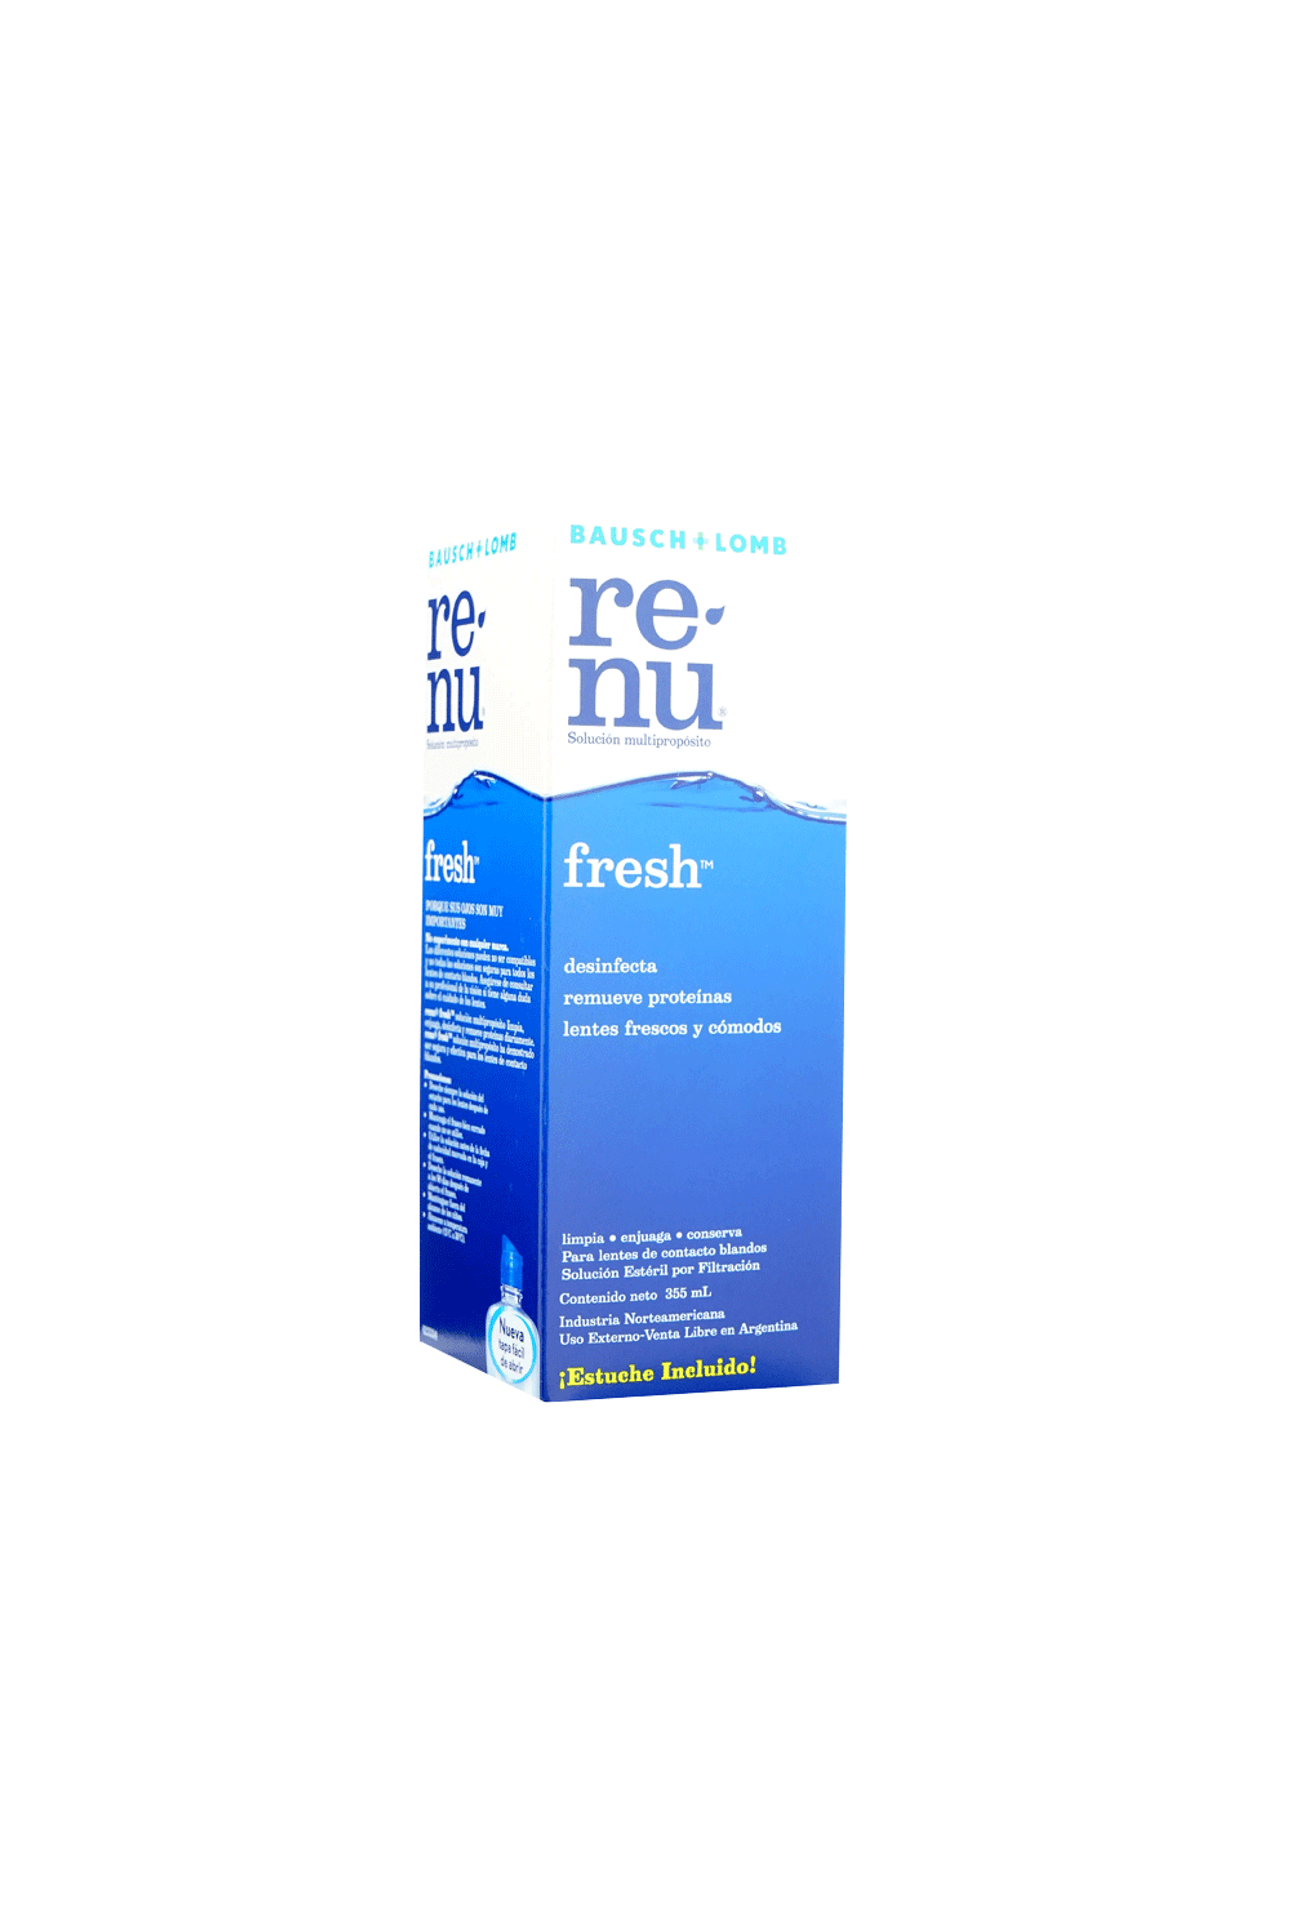 Renu-Renu-fresh-solucion-multiproposito-x-355-ml-0310119033340_img1